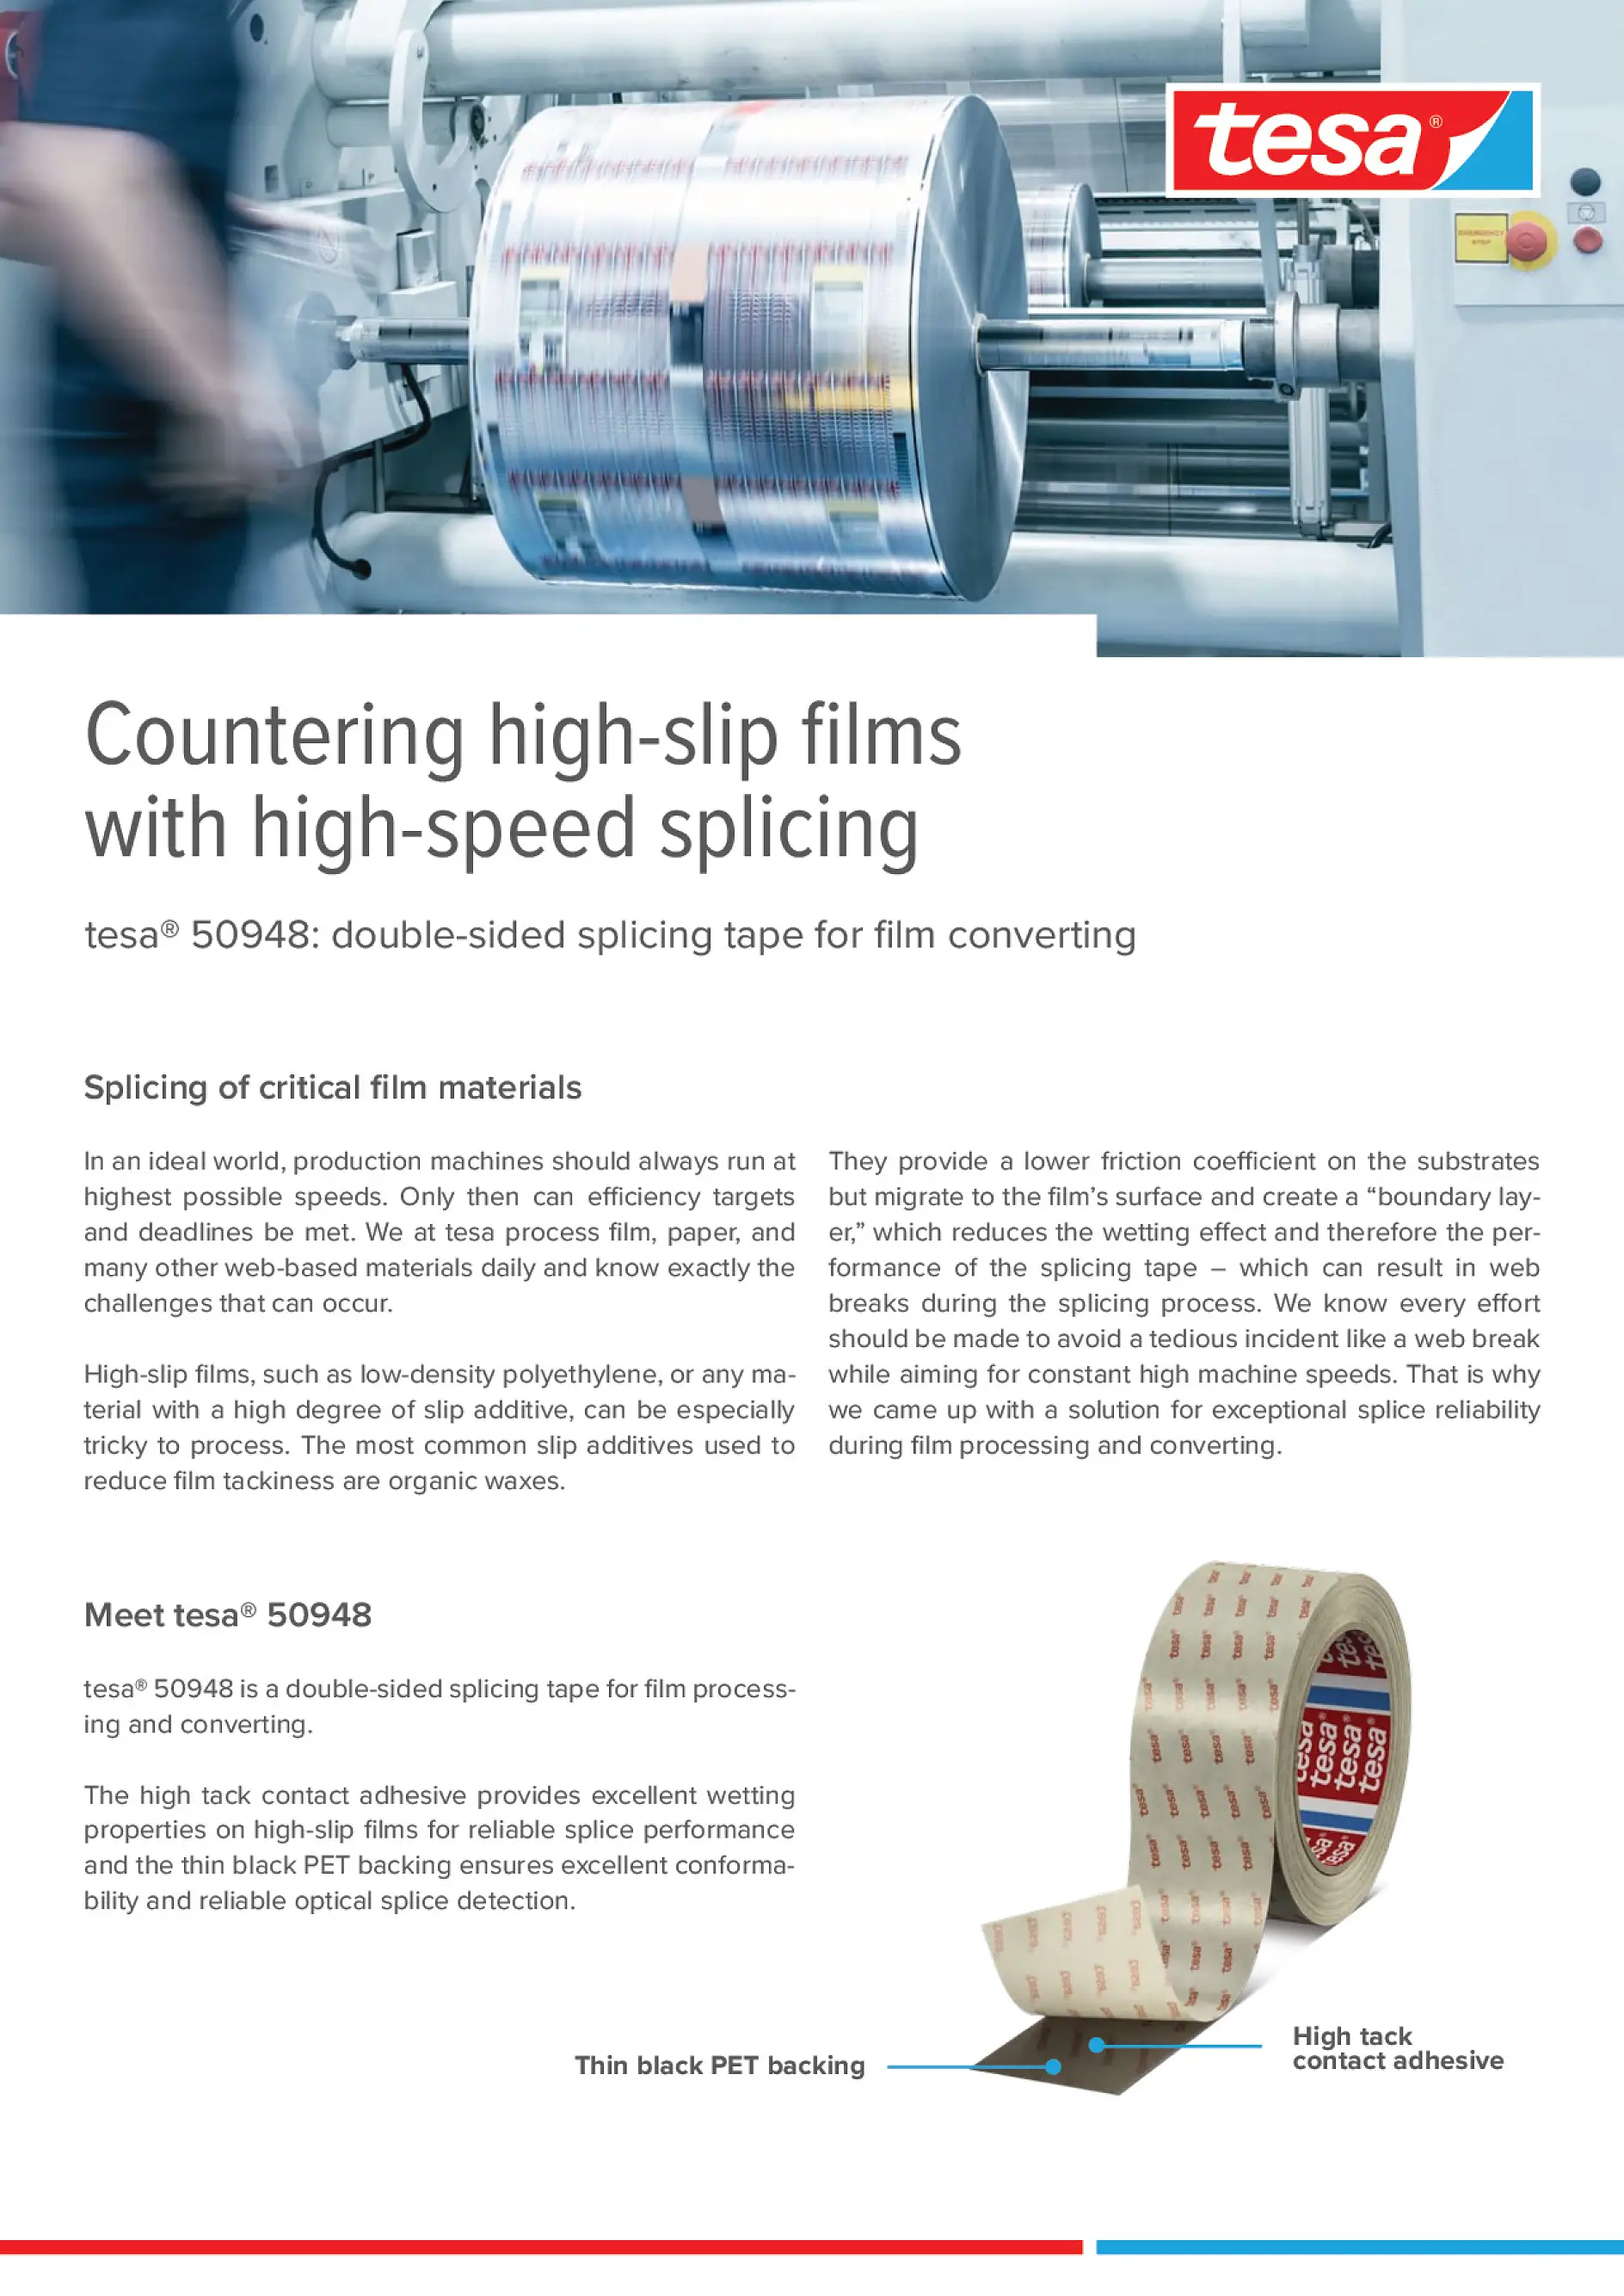 tesa® 50948 double-sided splicing high-slip films